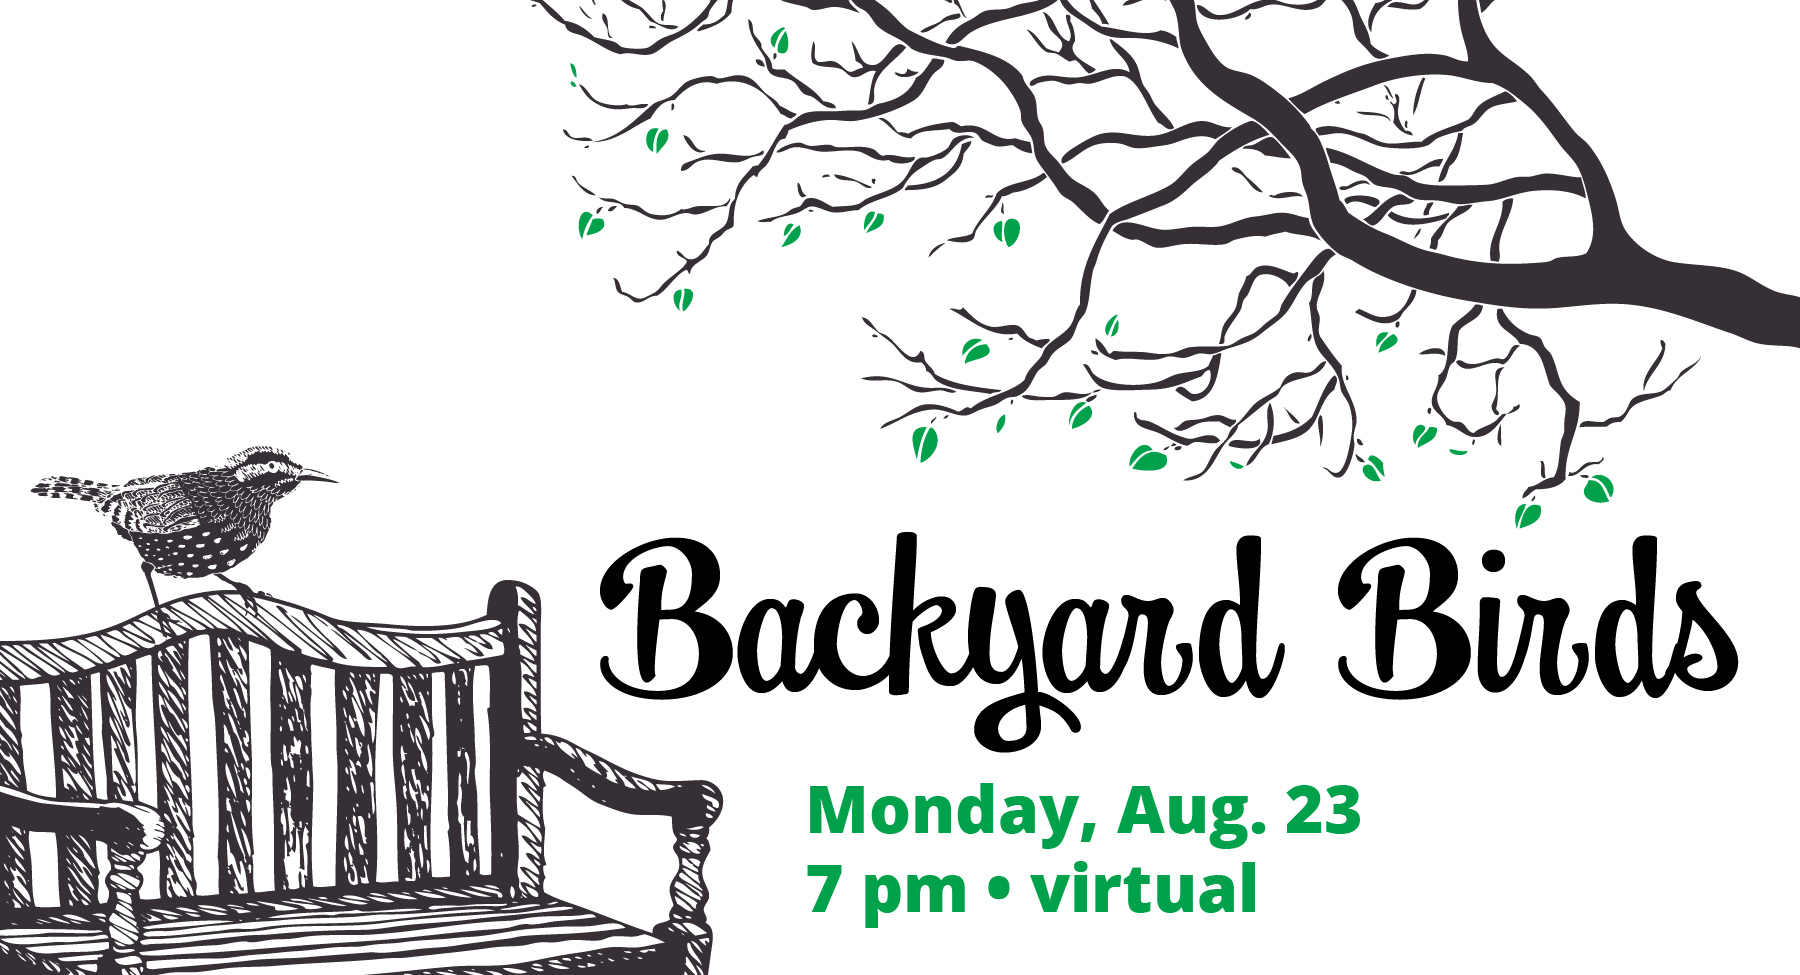 Backyard Birds, Monday, August 23 at 7 pm